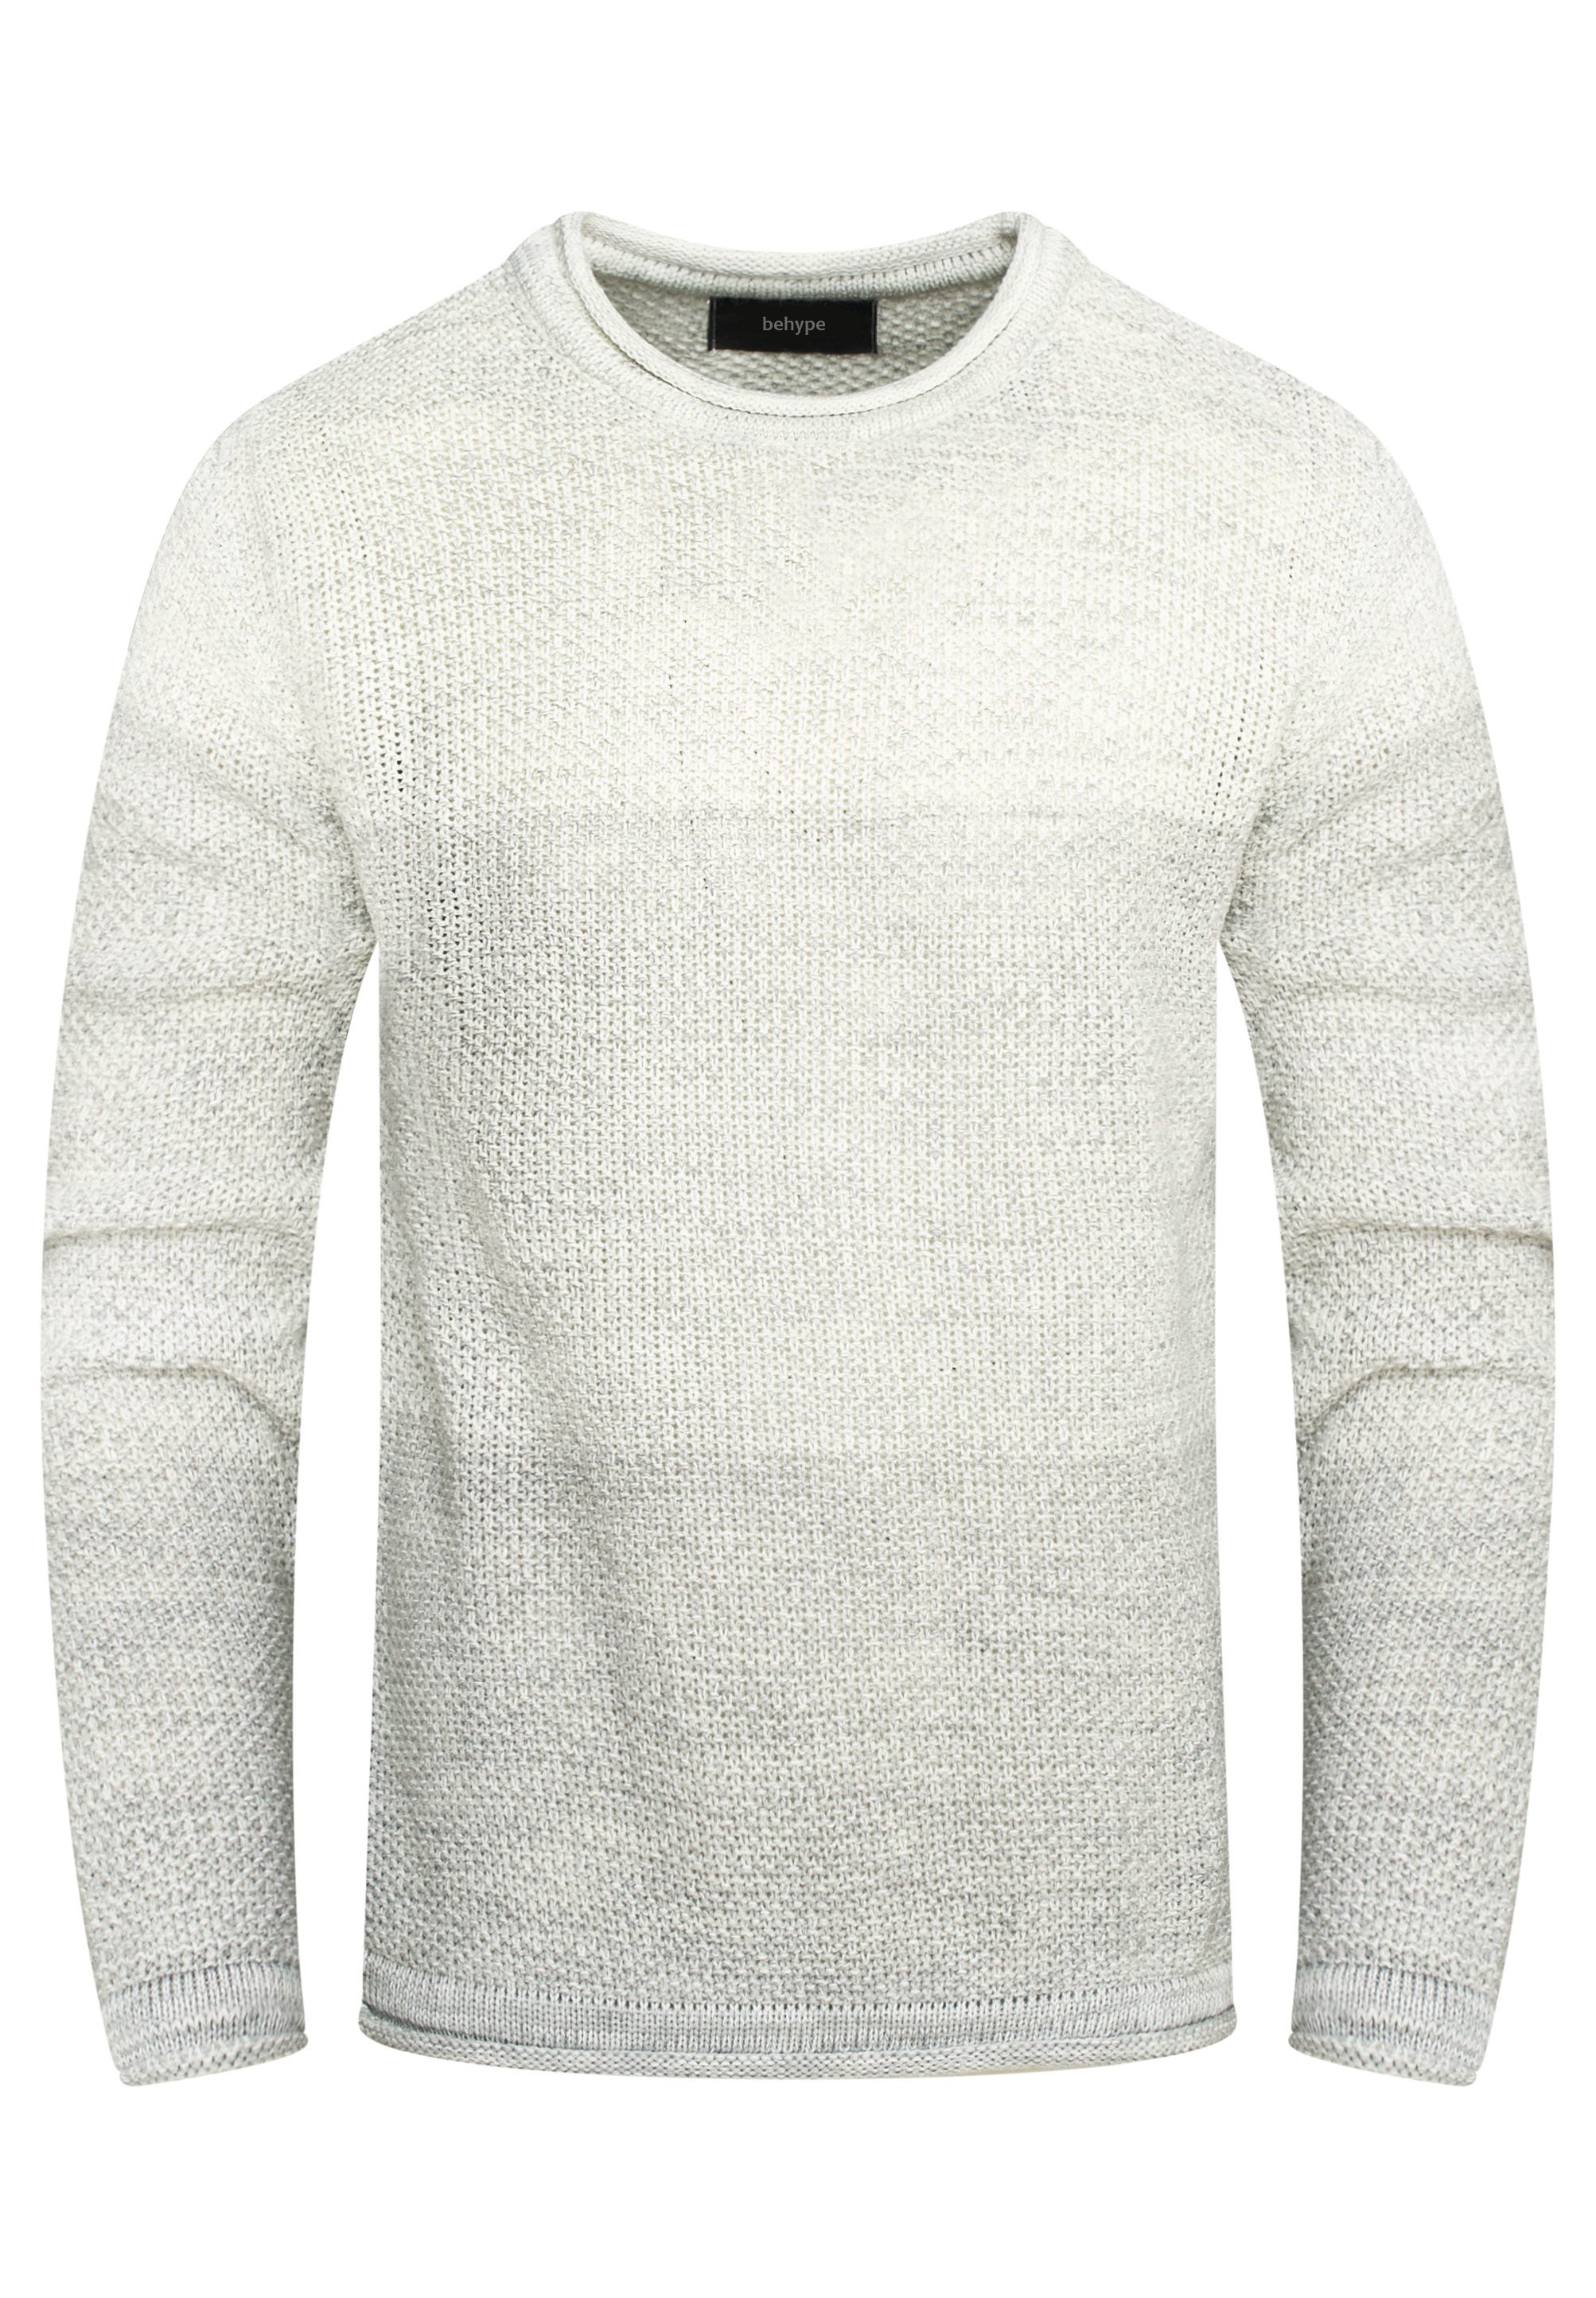 Пуловер behype MKBlone, серый пуловер behype mkboni серый